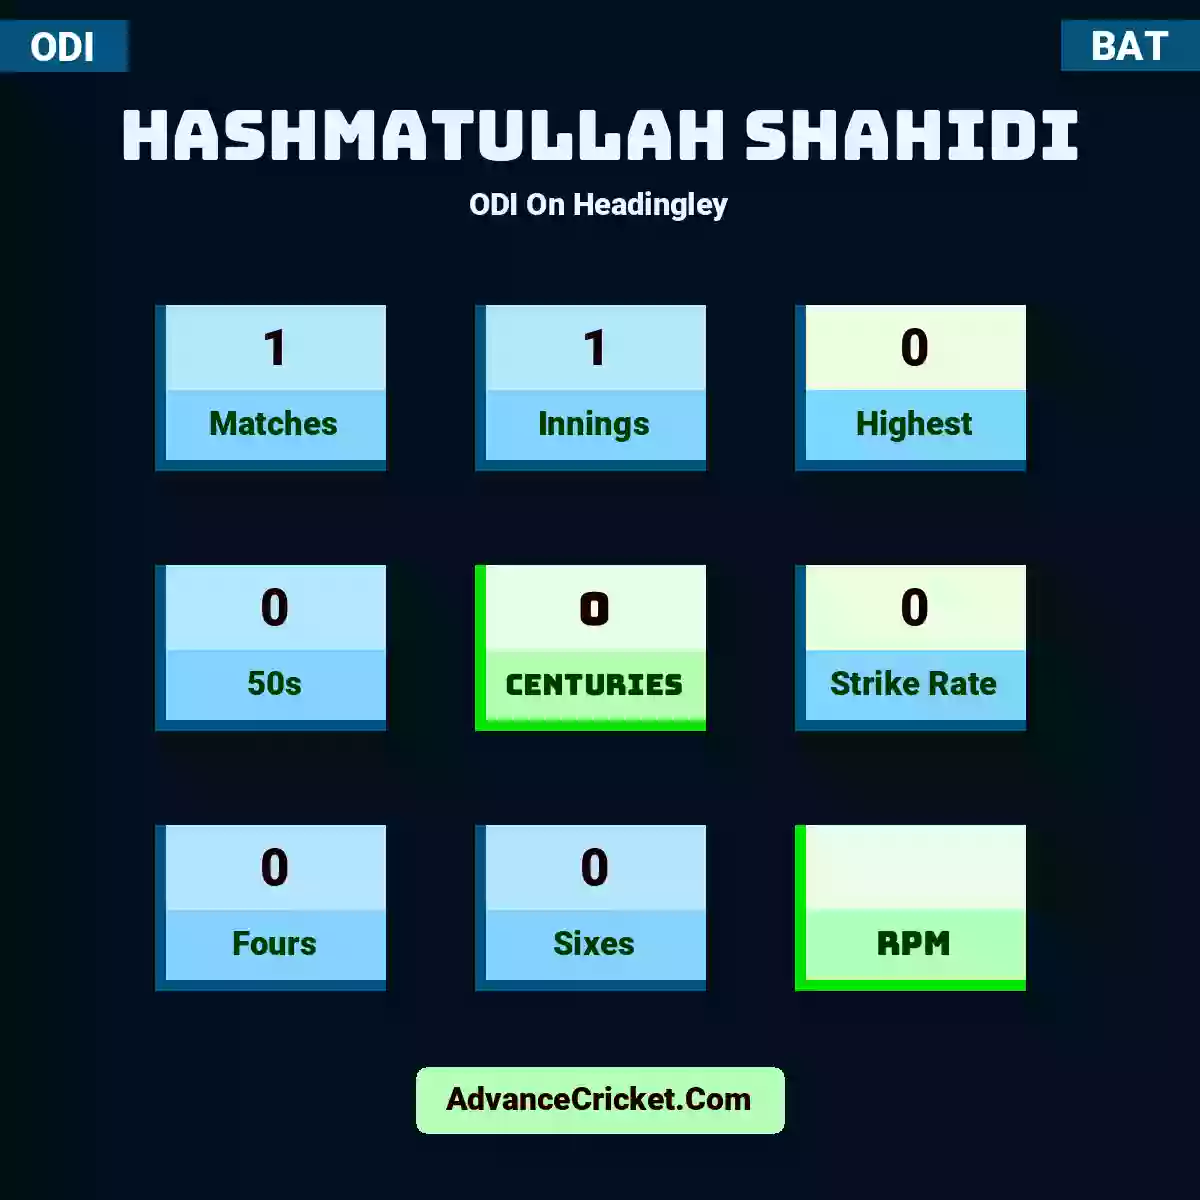 Hashmatullah Shahidi ODI  On Headingley, Hashmatullah Shahidi played 1 matches, scored 0 runs as highest, 0 half-centuries, and 0 centuries, with a strike rate of 0. H.Shahidi hit 0 fours and 0 sixes.